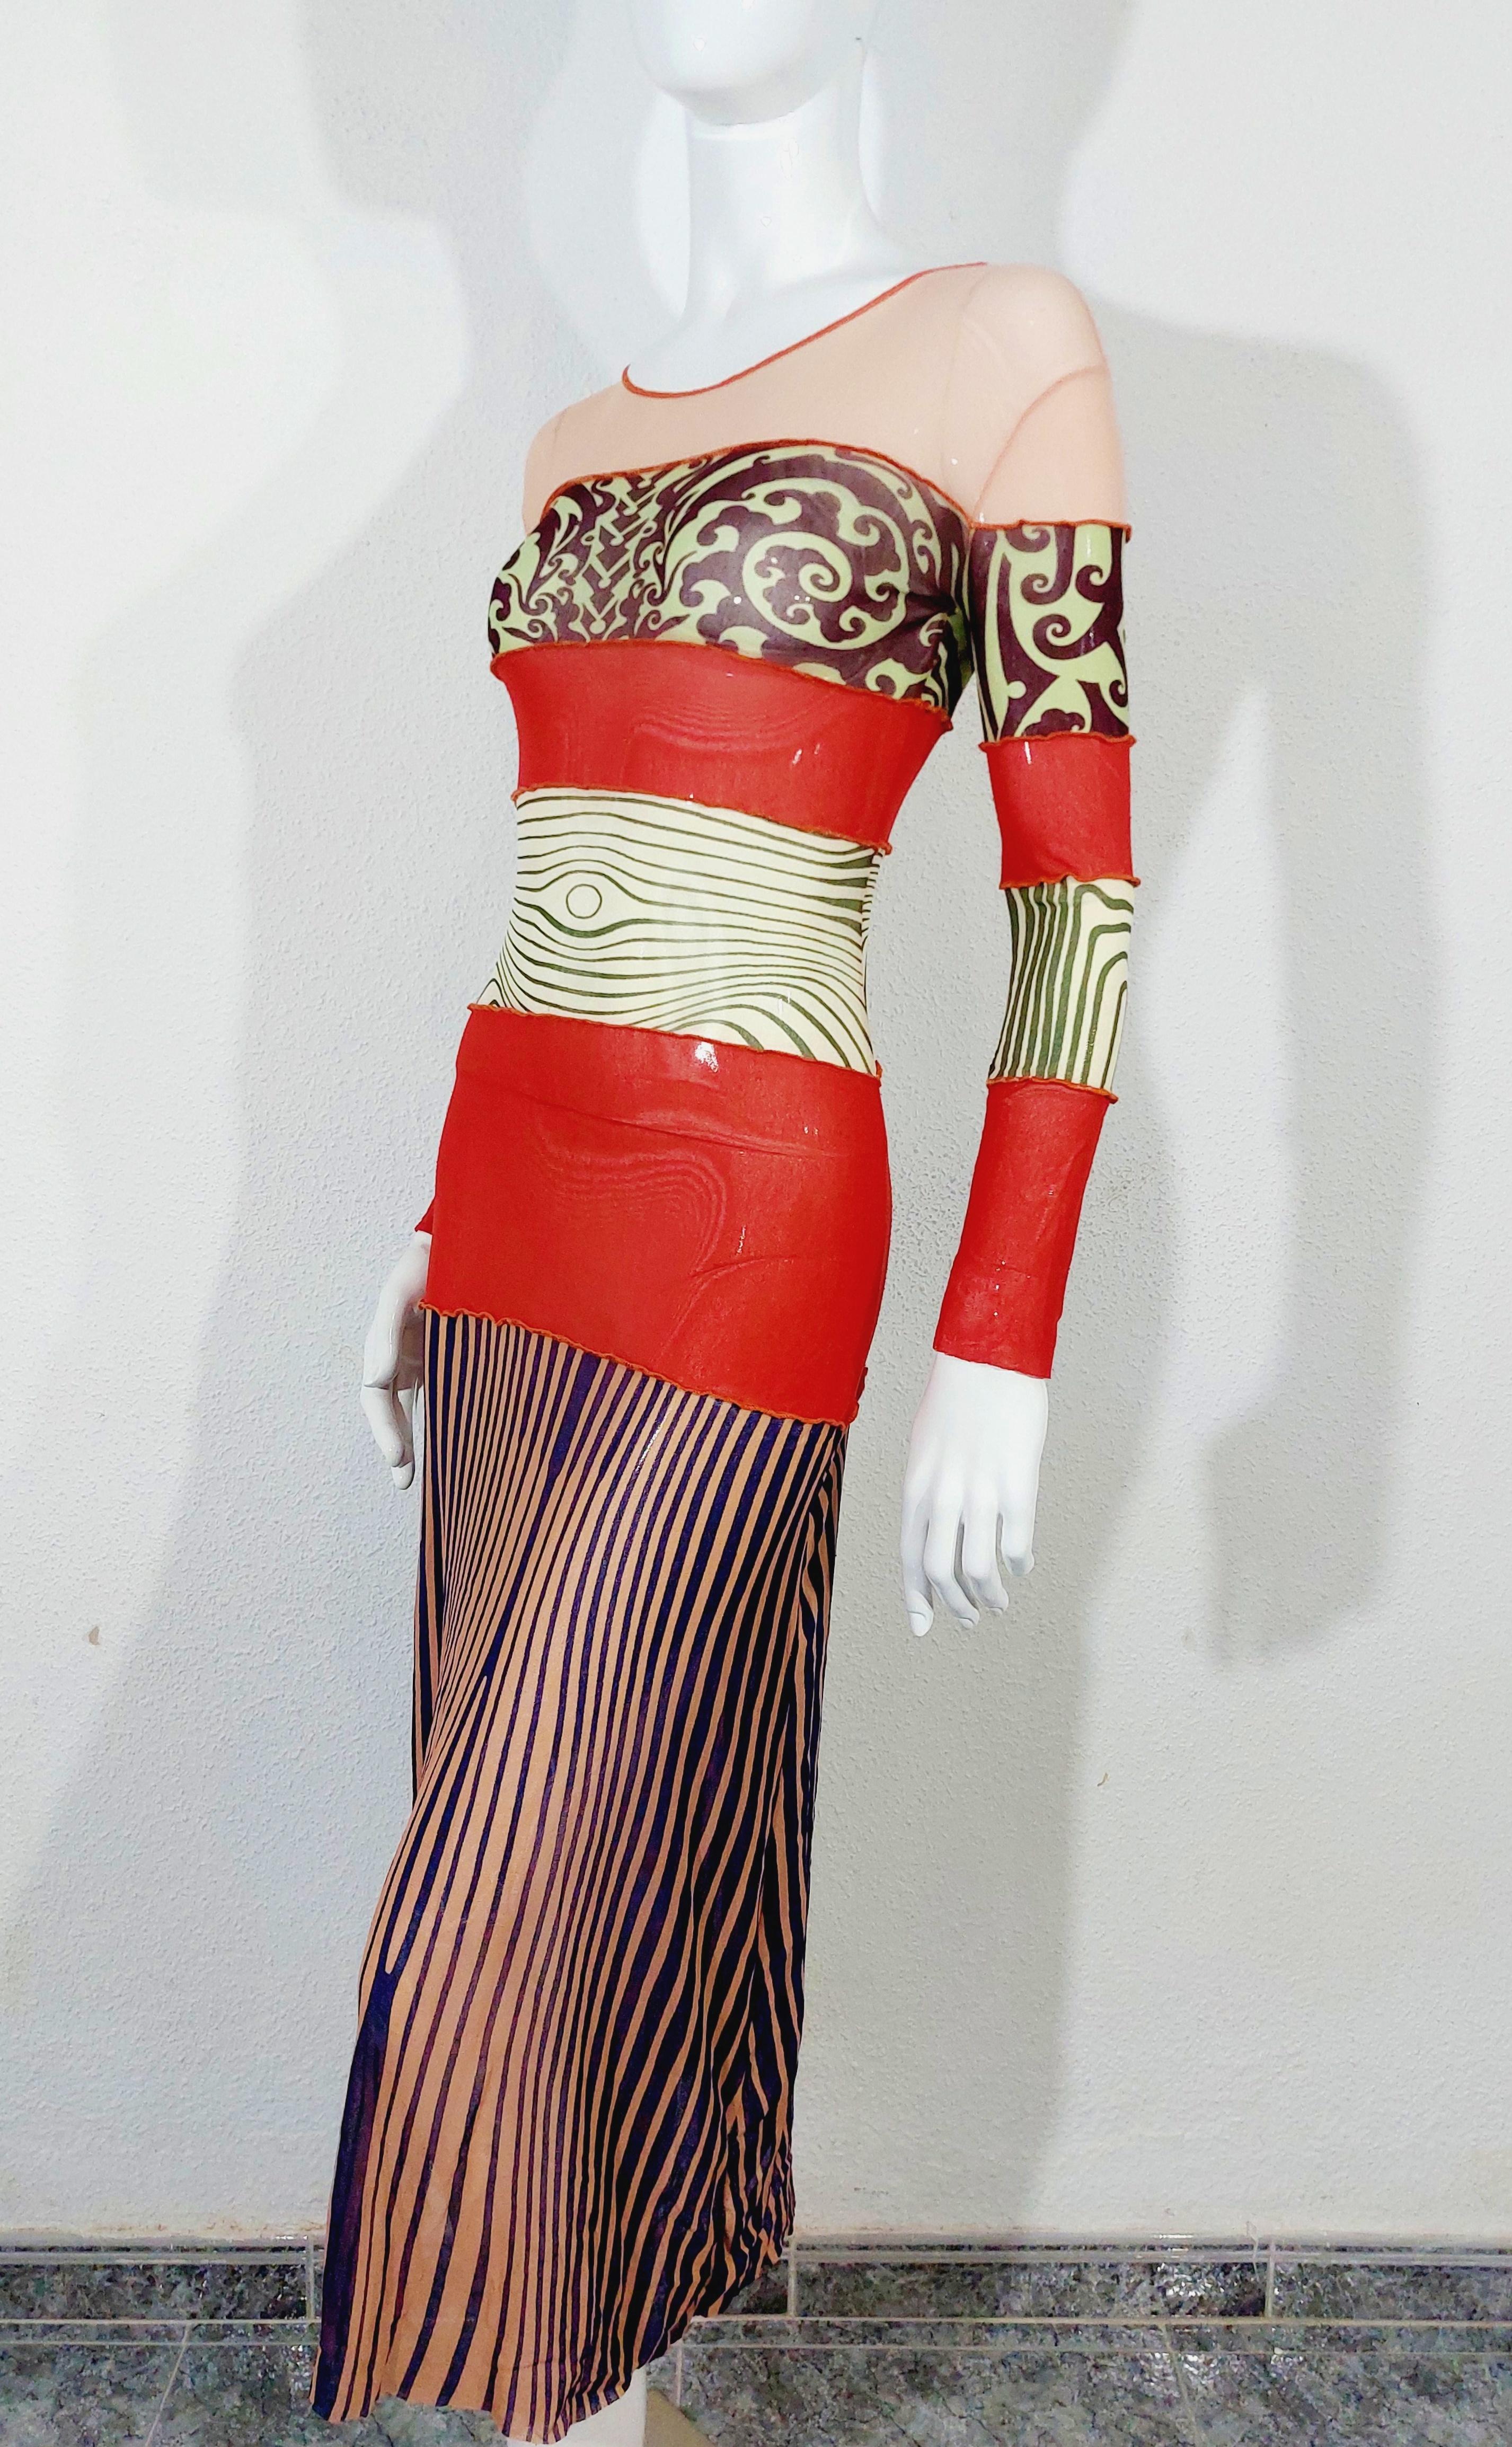 Jean Paul Gaultier Optical Illusion Nude Ethic Trompe l'oeil Vanessa Guide Dress For Sale 4